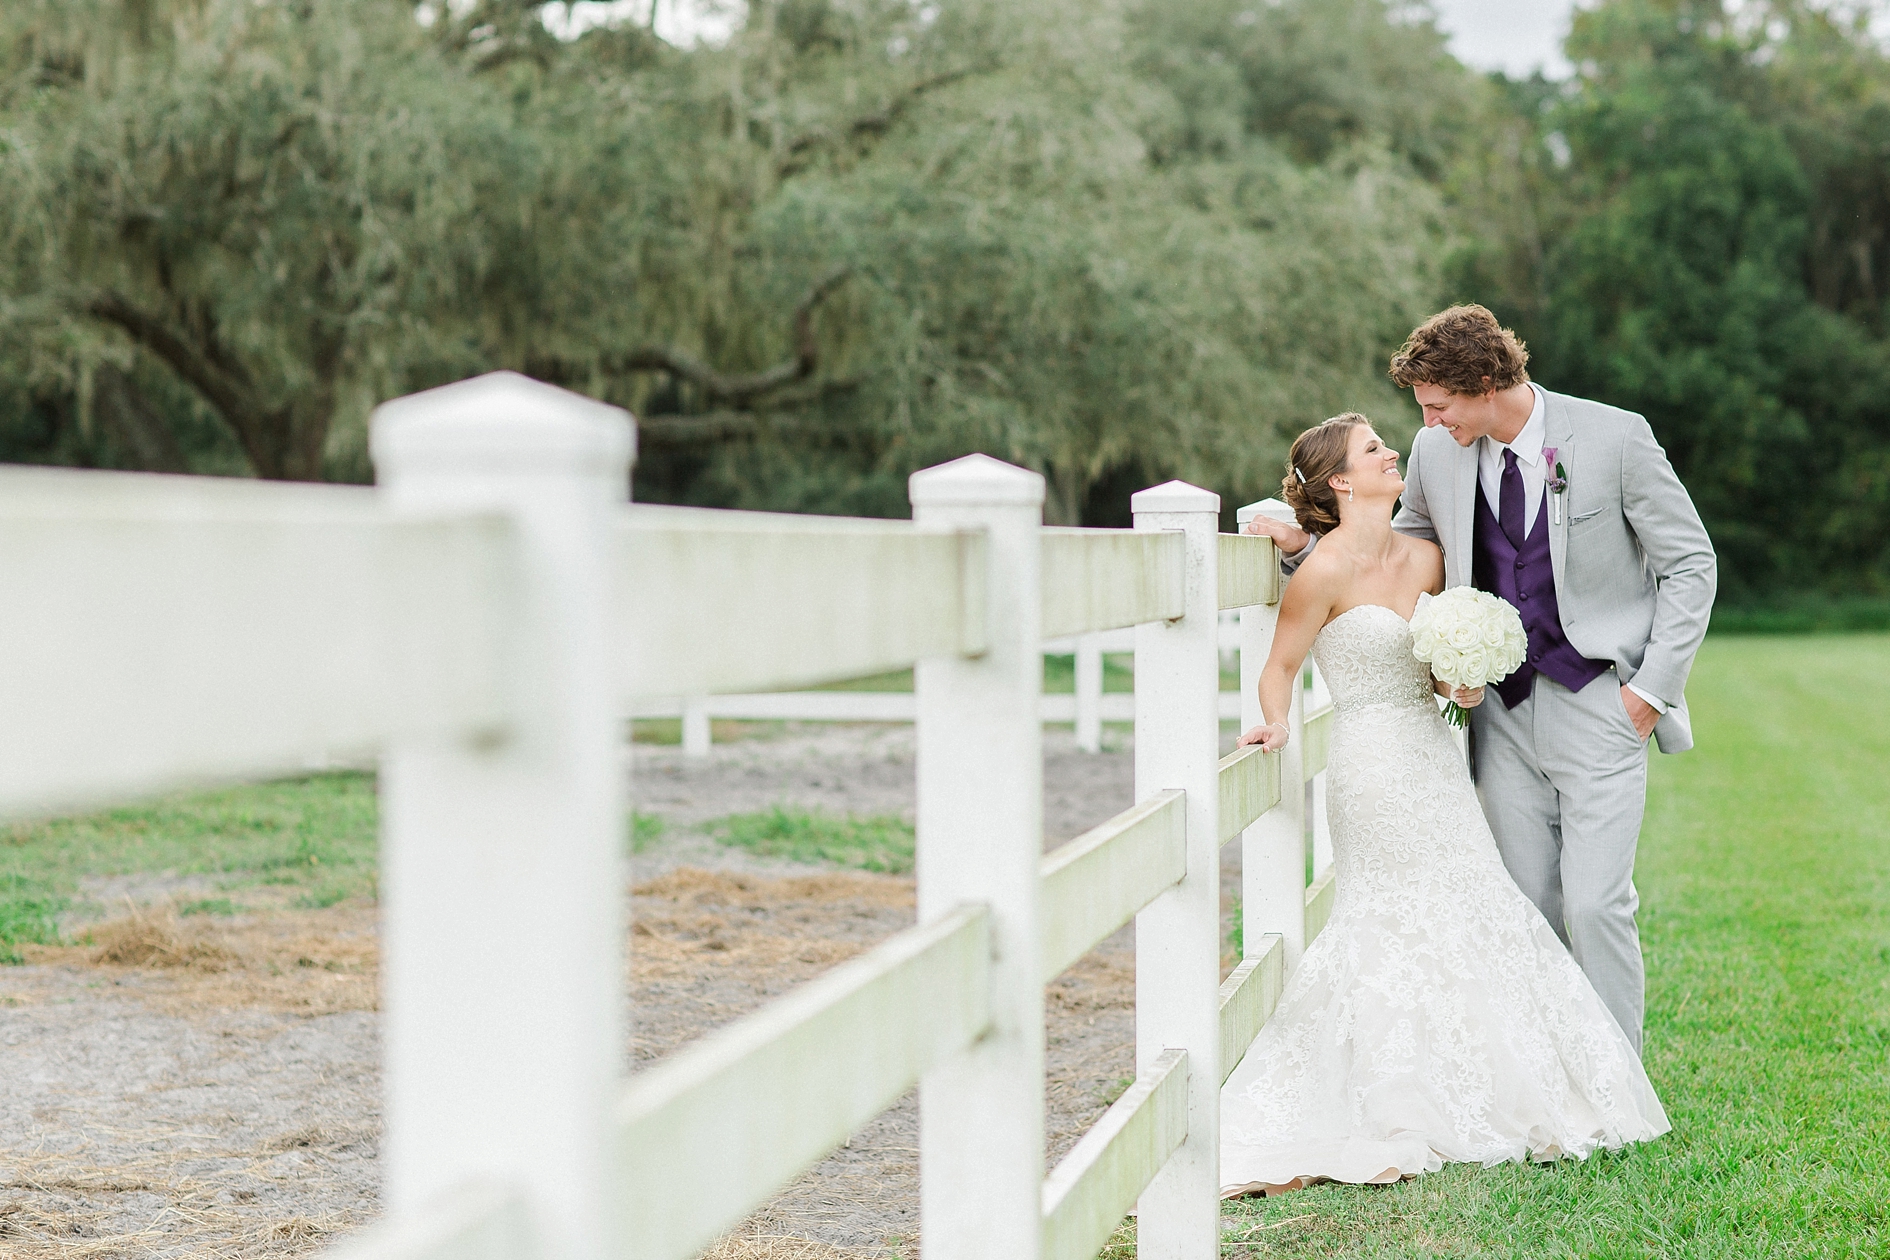 Lange Farm Wedding | © Ailyn La Torre Photography 2015